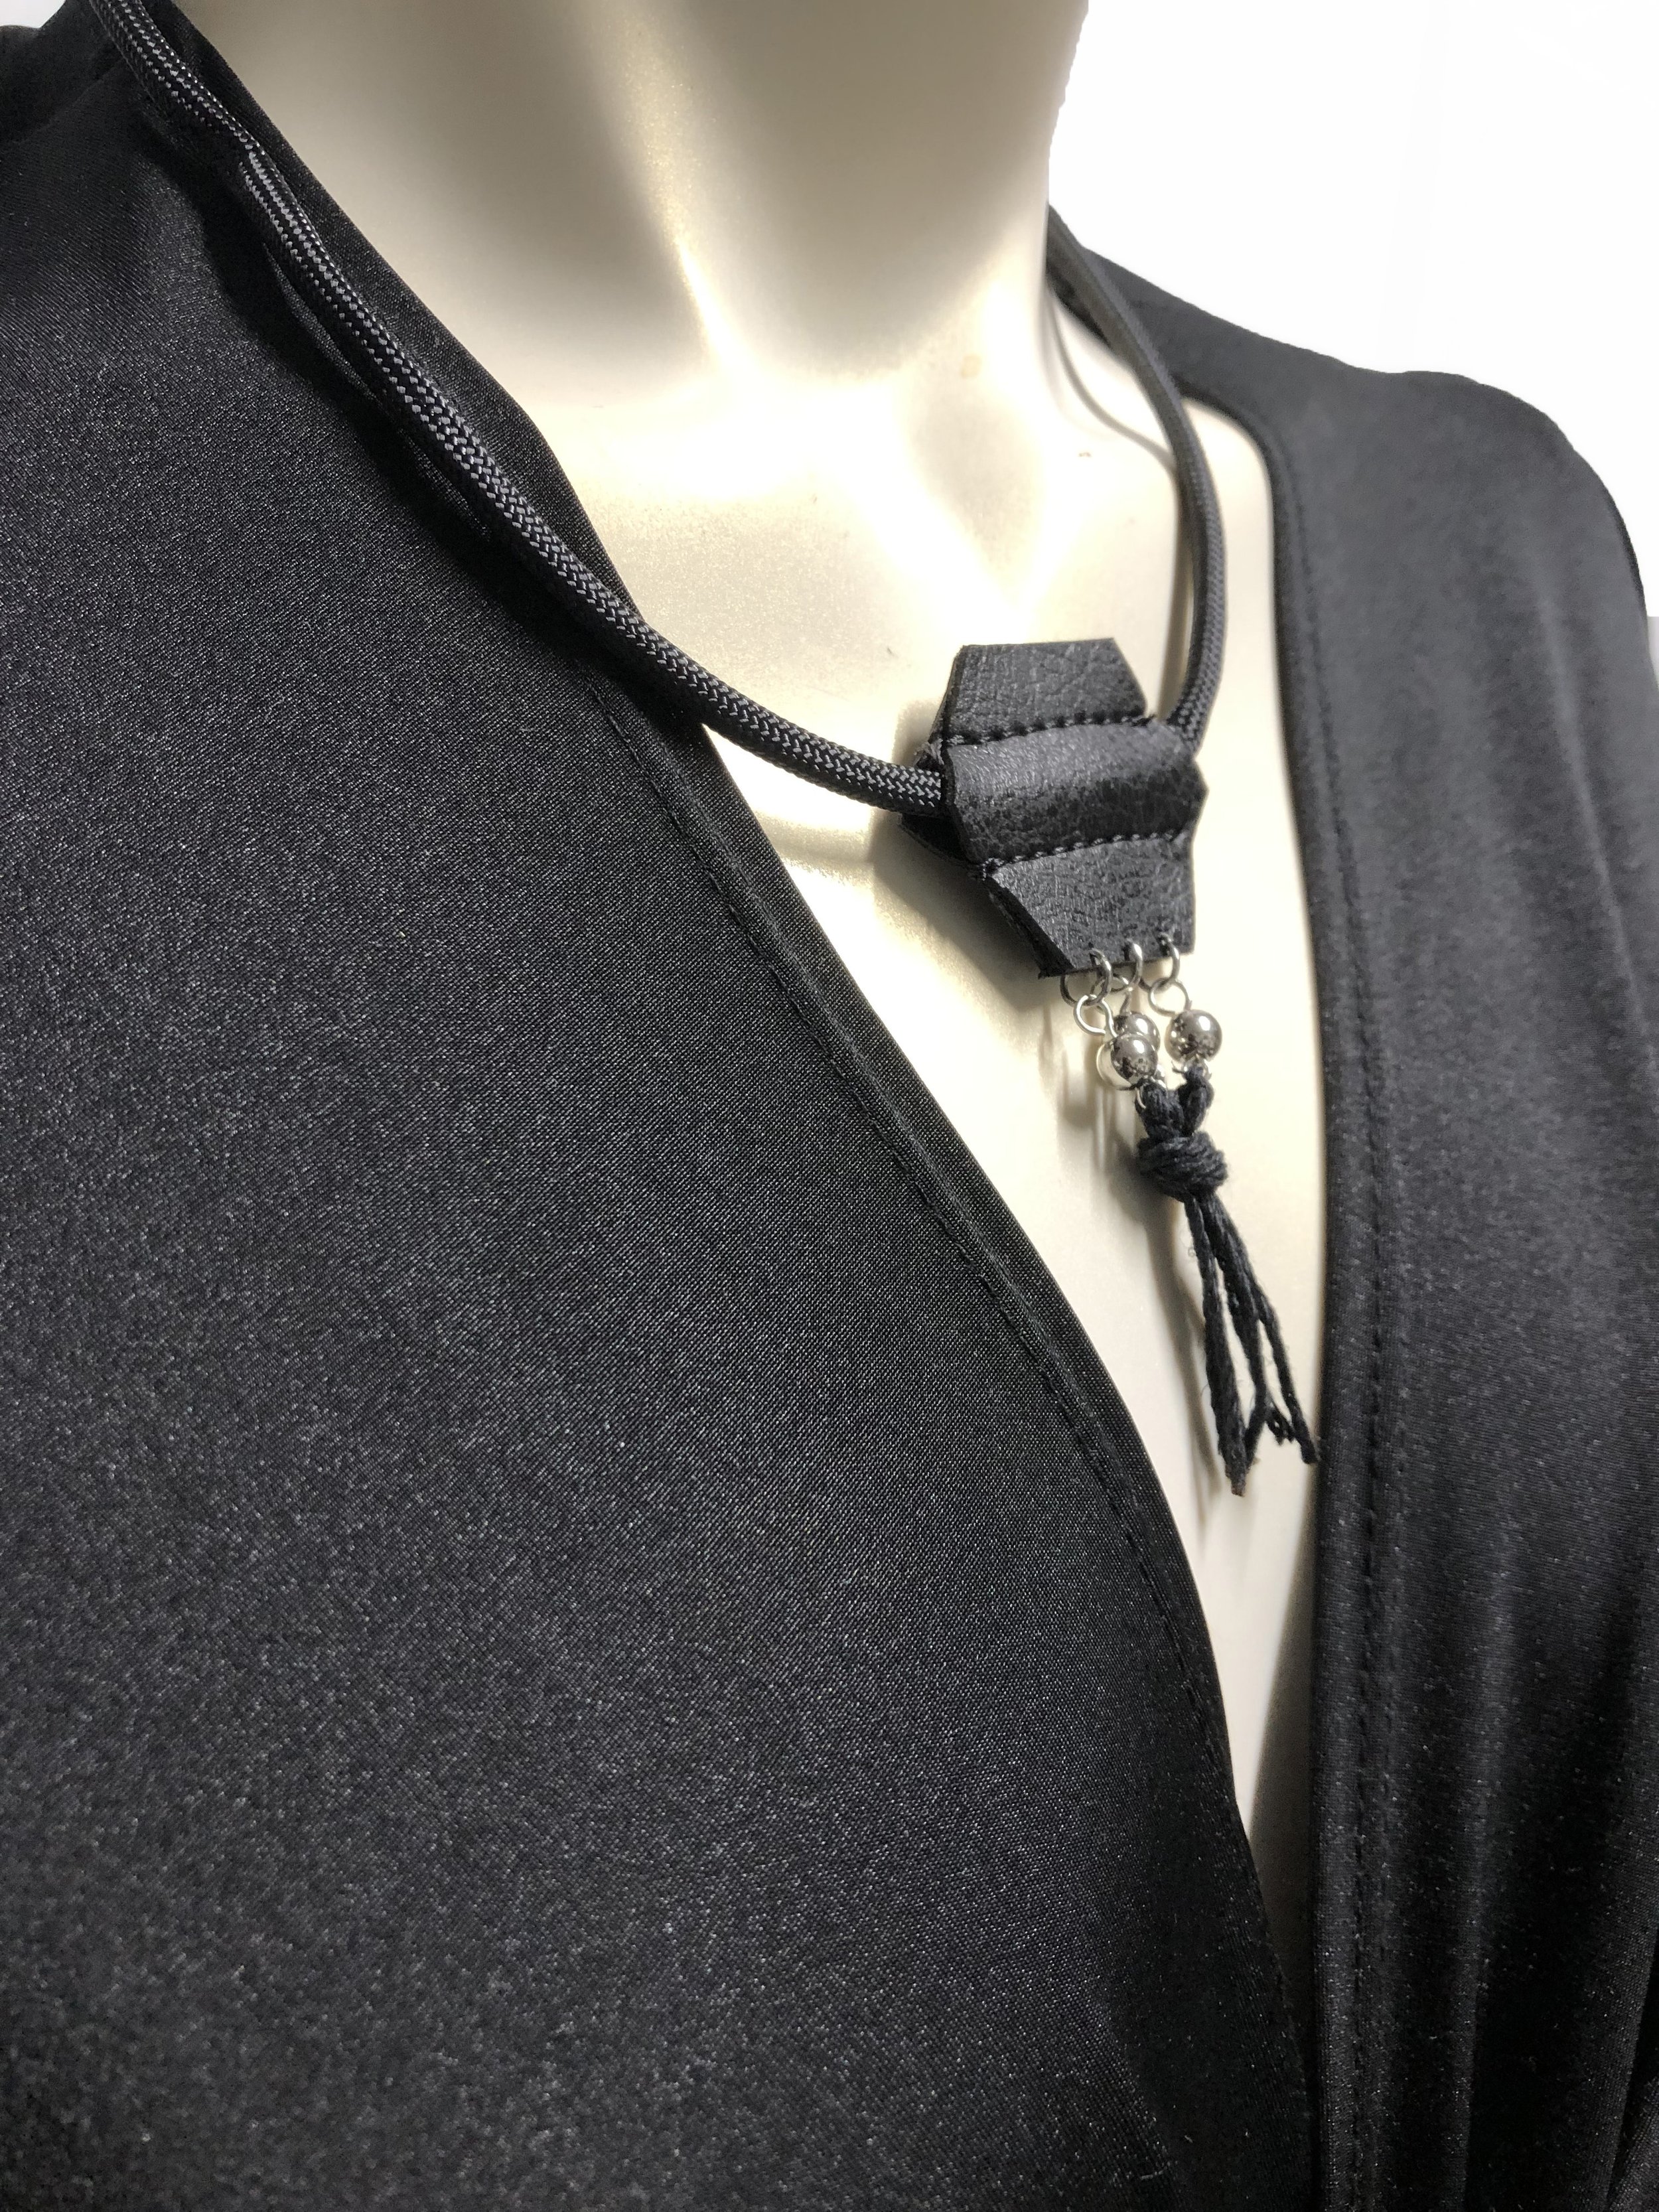 Hexagon black cord necklace by Black & Gold Fashions (6).JPG